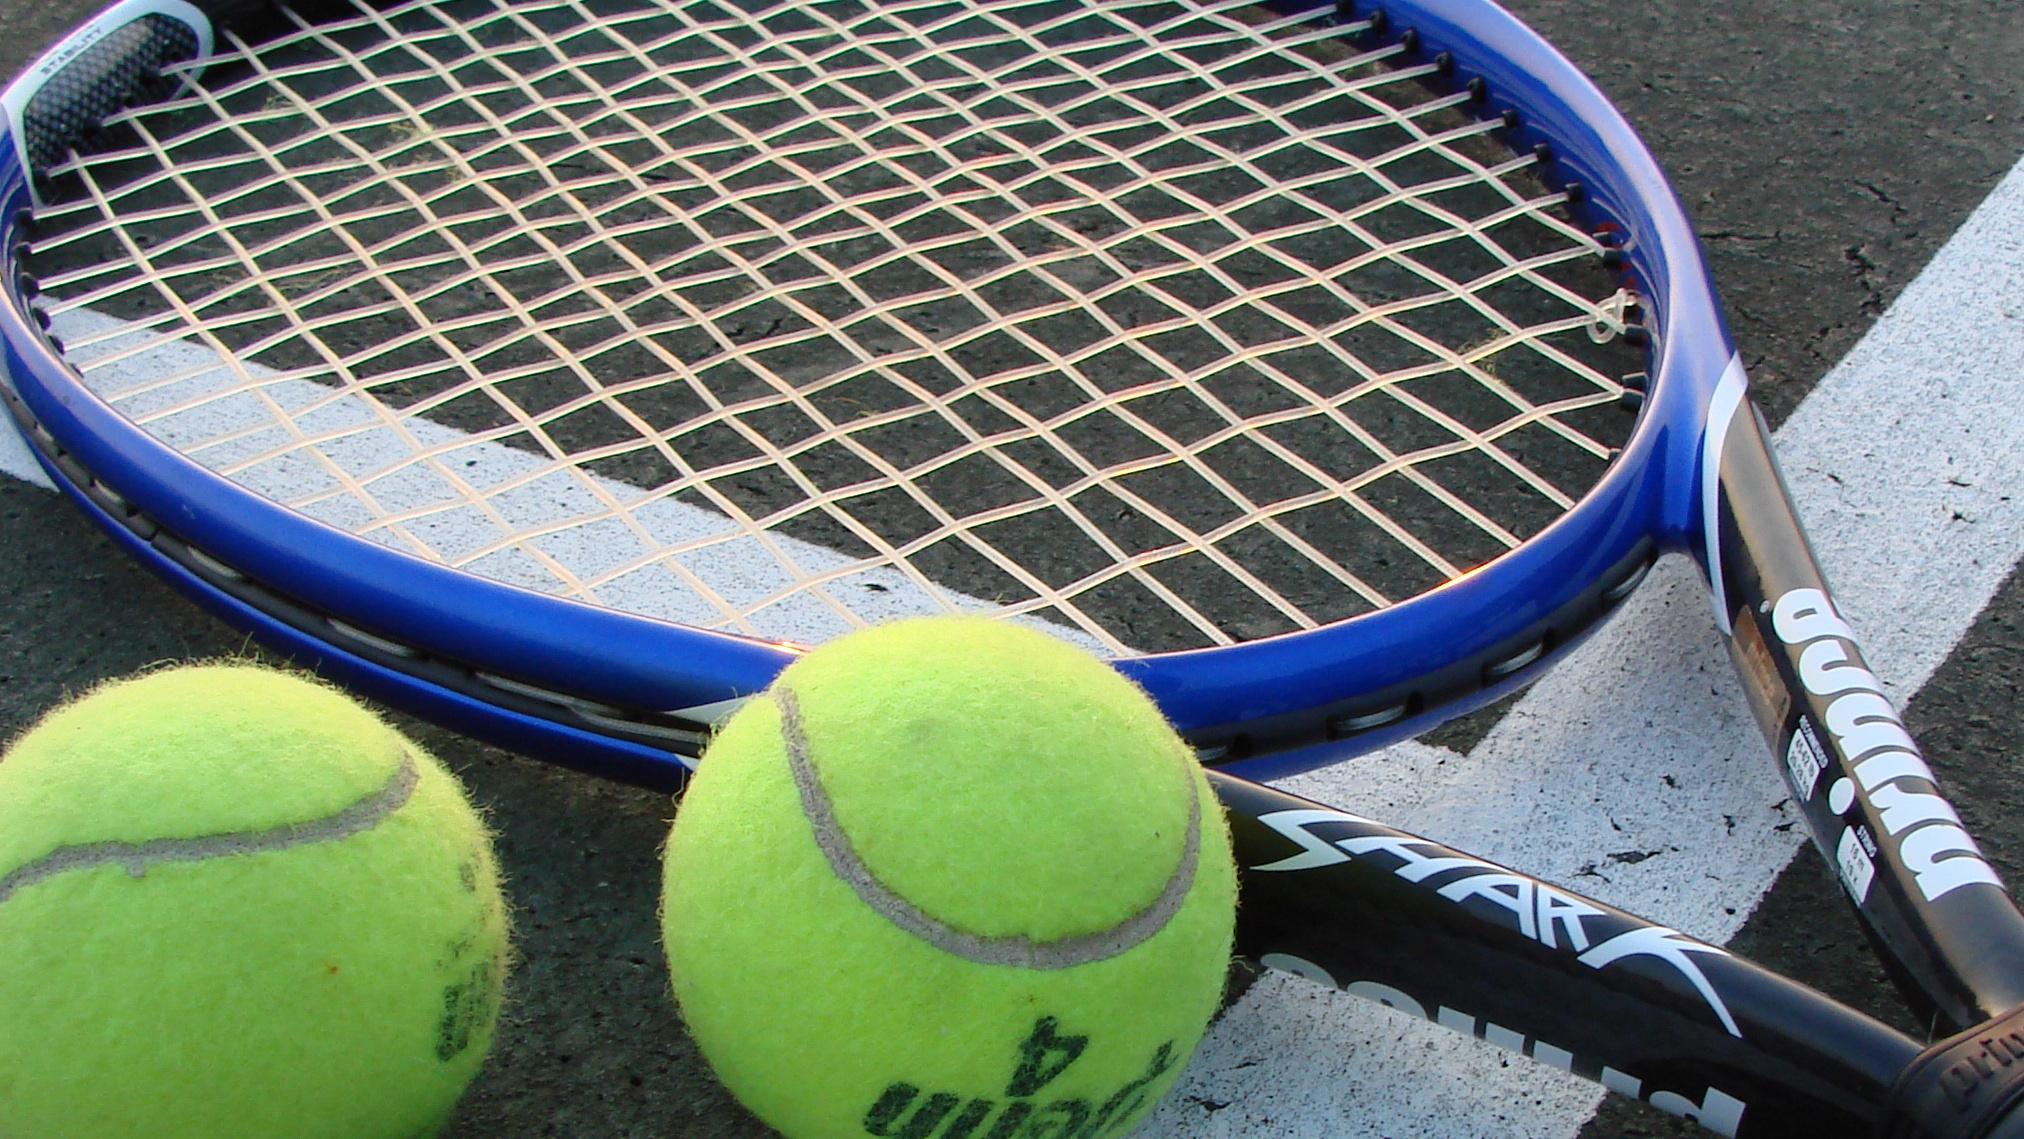 Tennis_Racket_and_Balls-Cropped.jpg